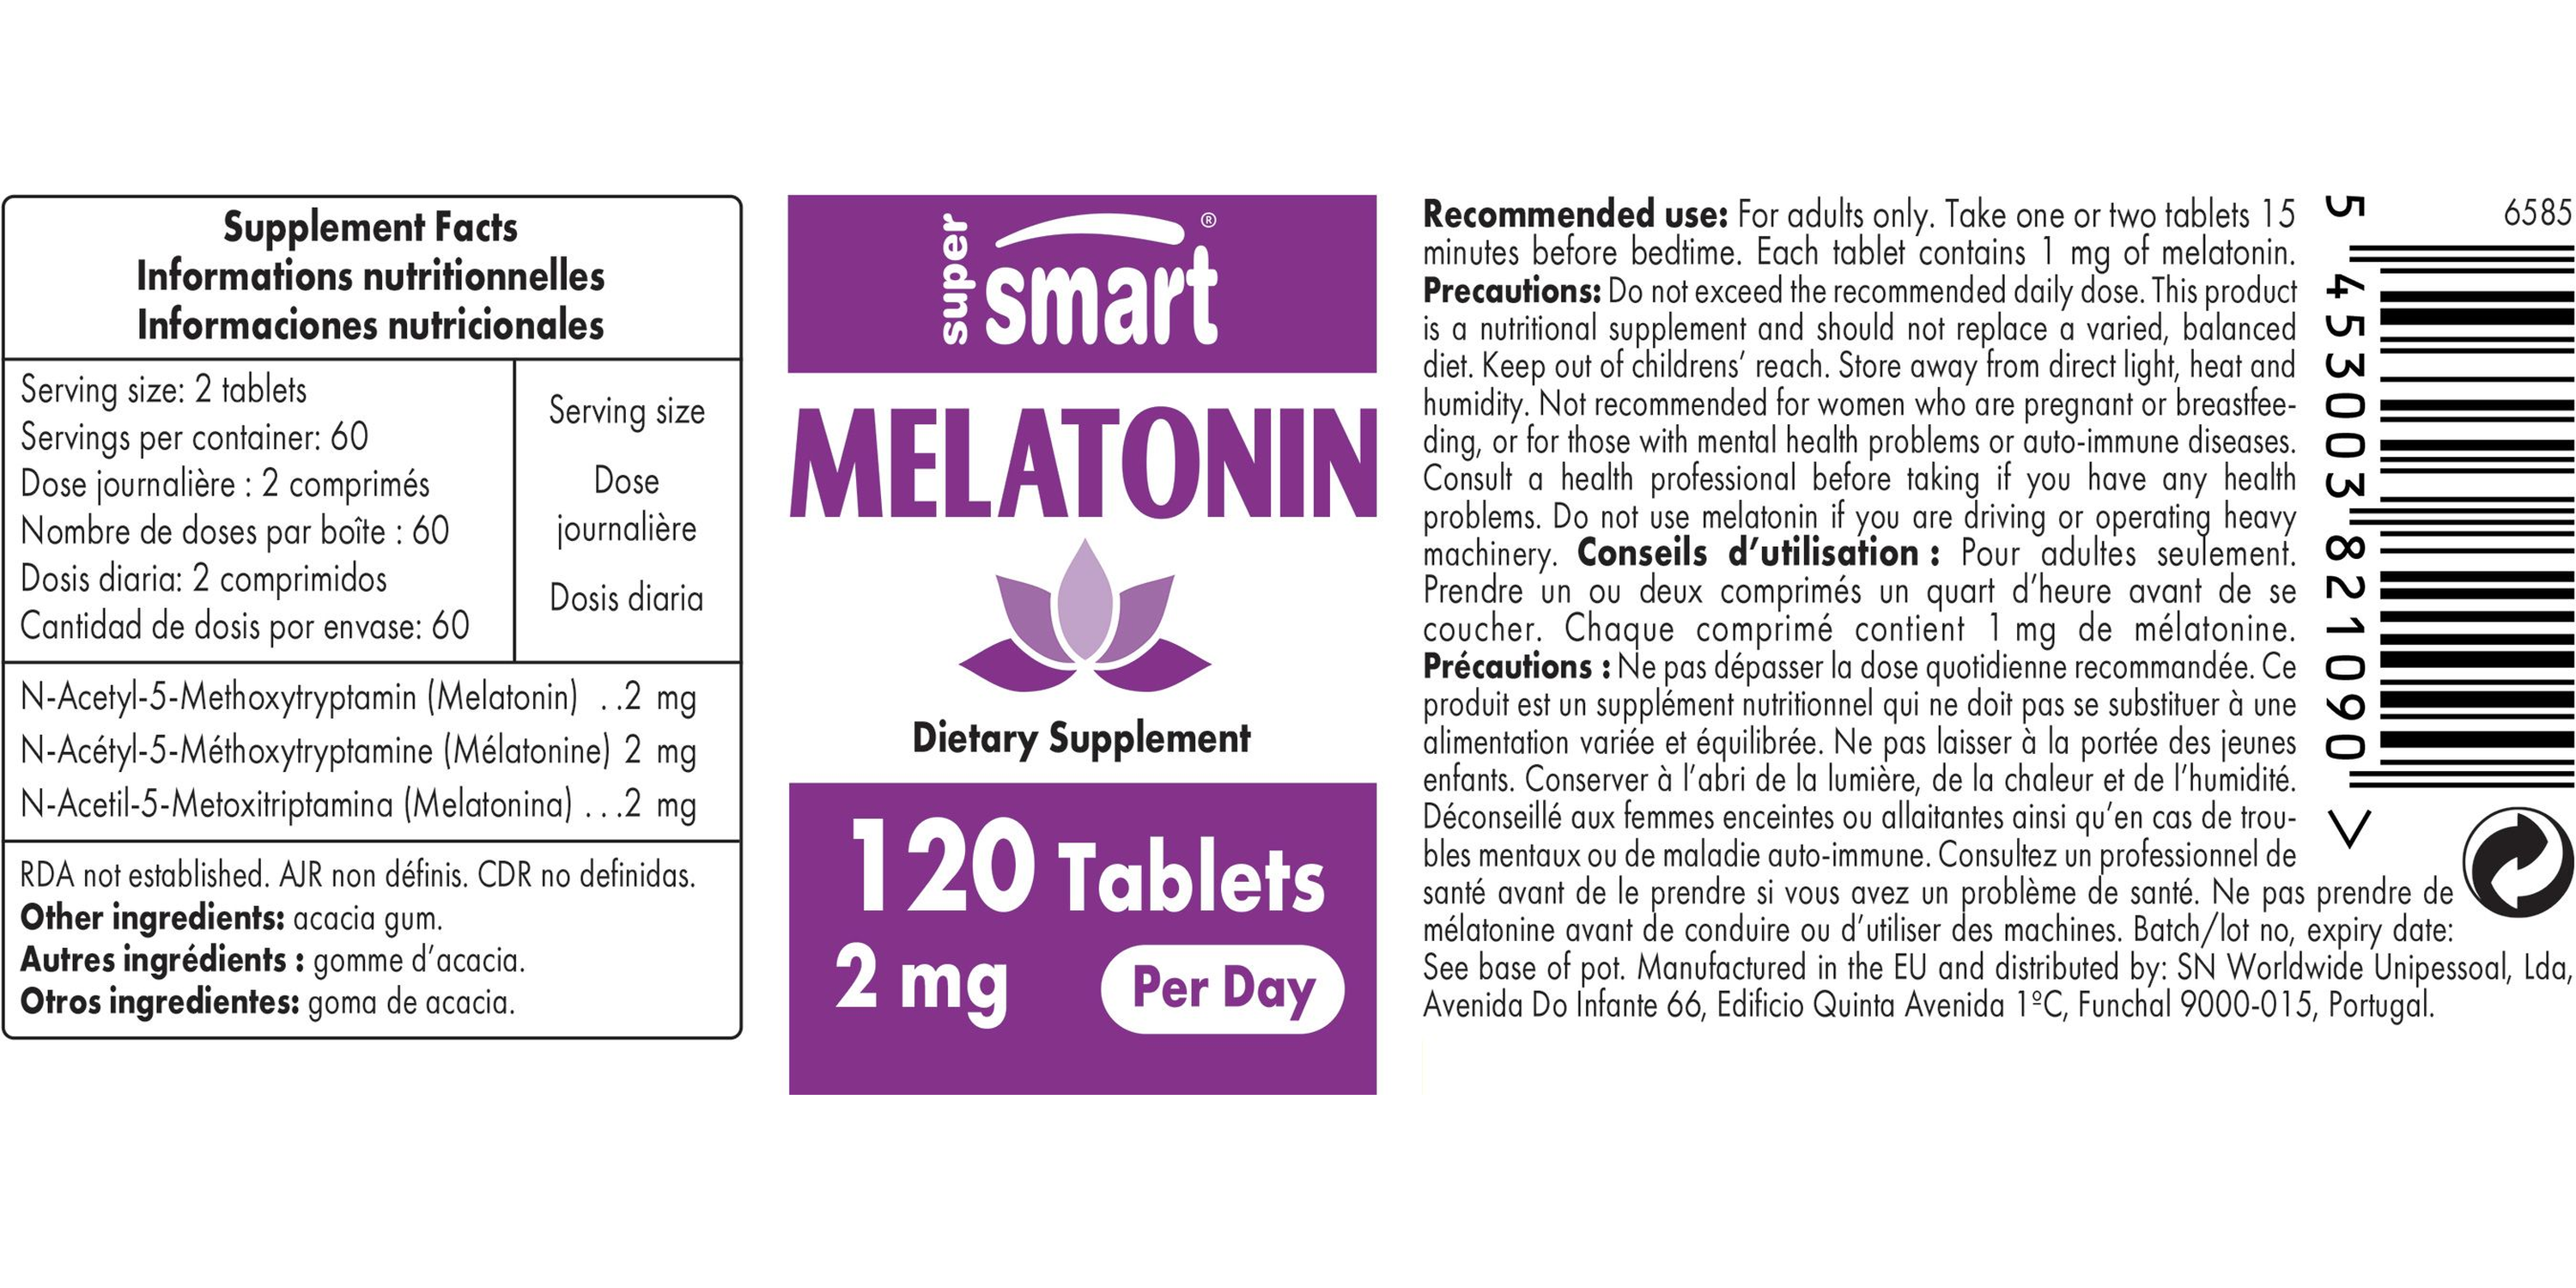 Melatonin Supplement